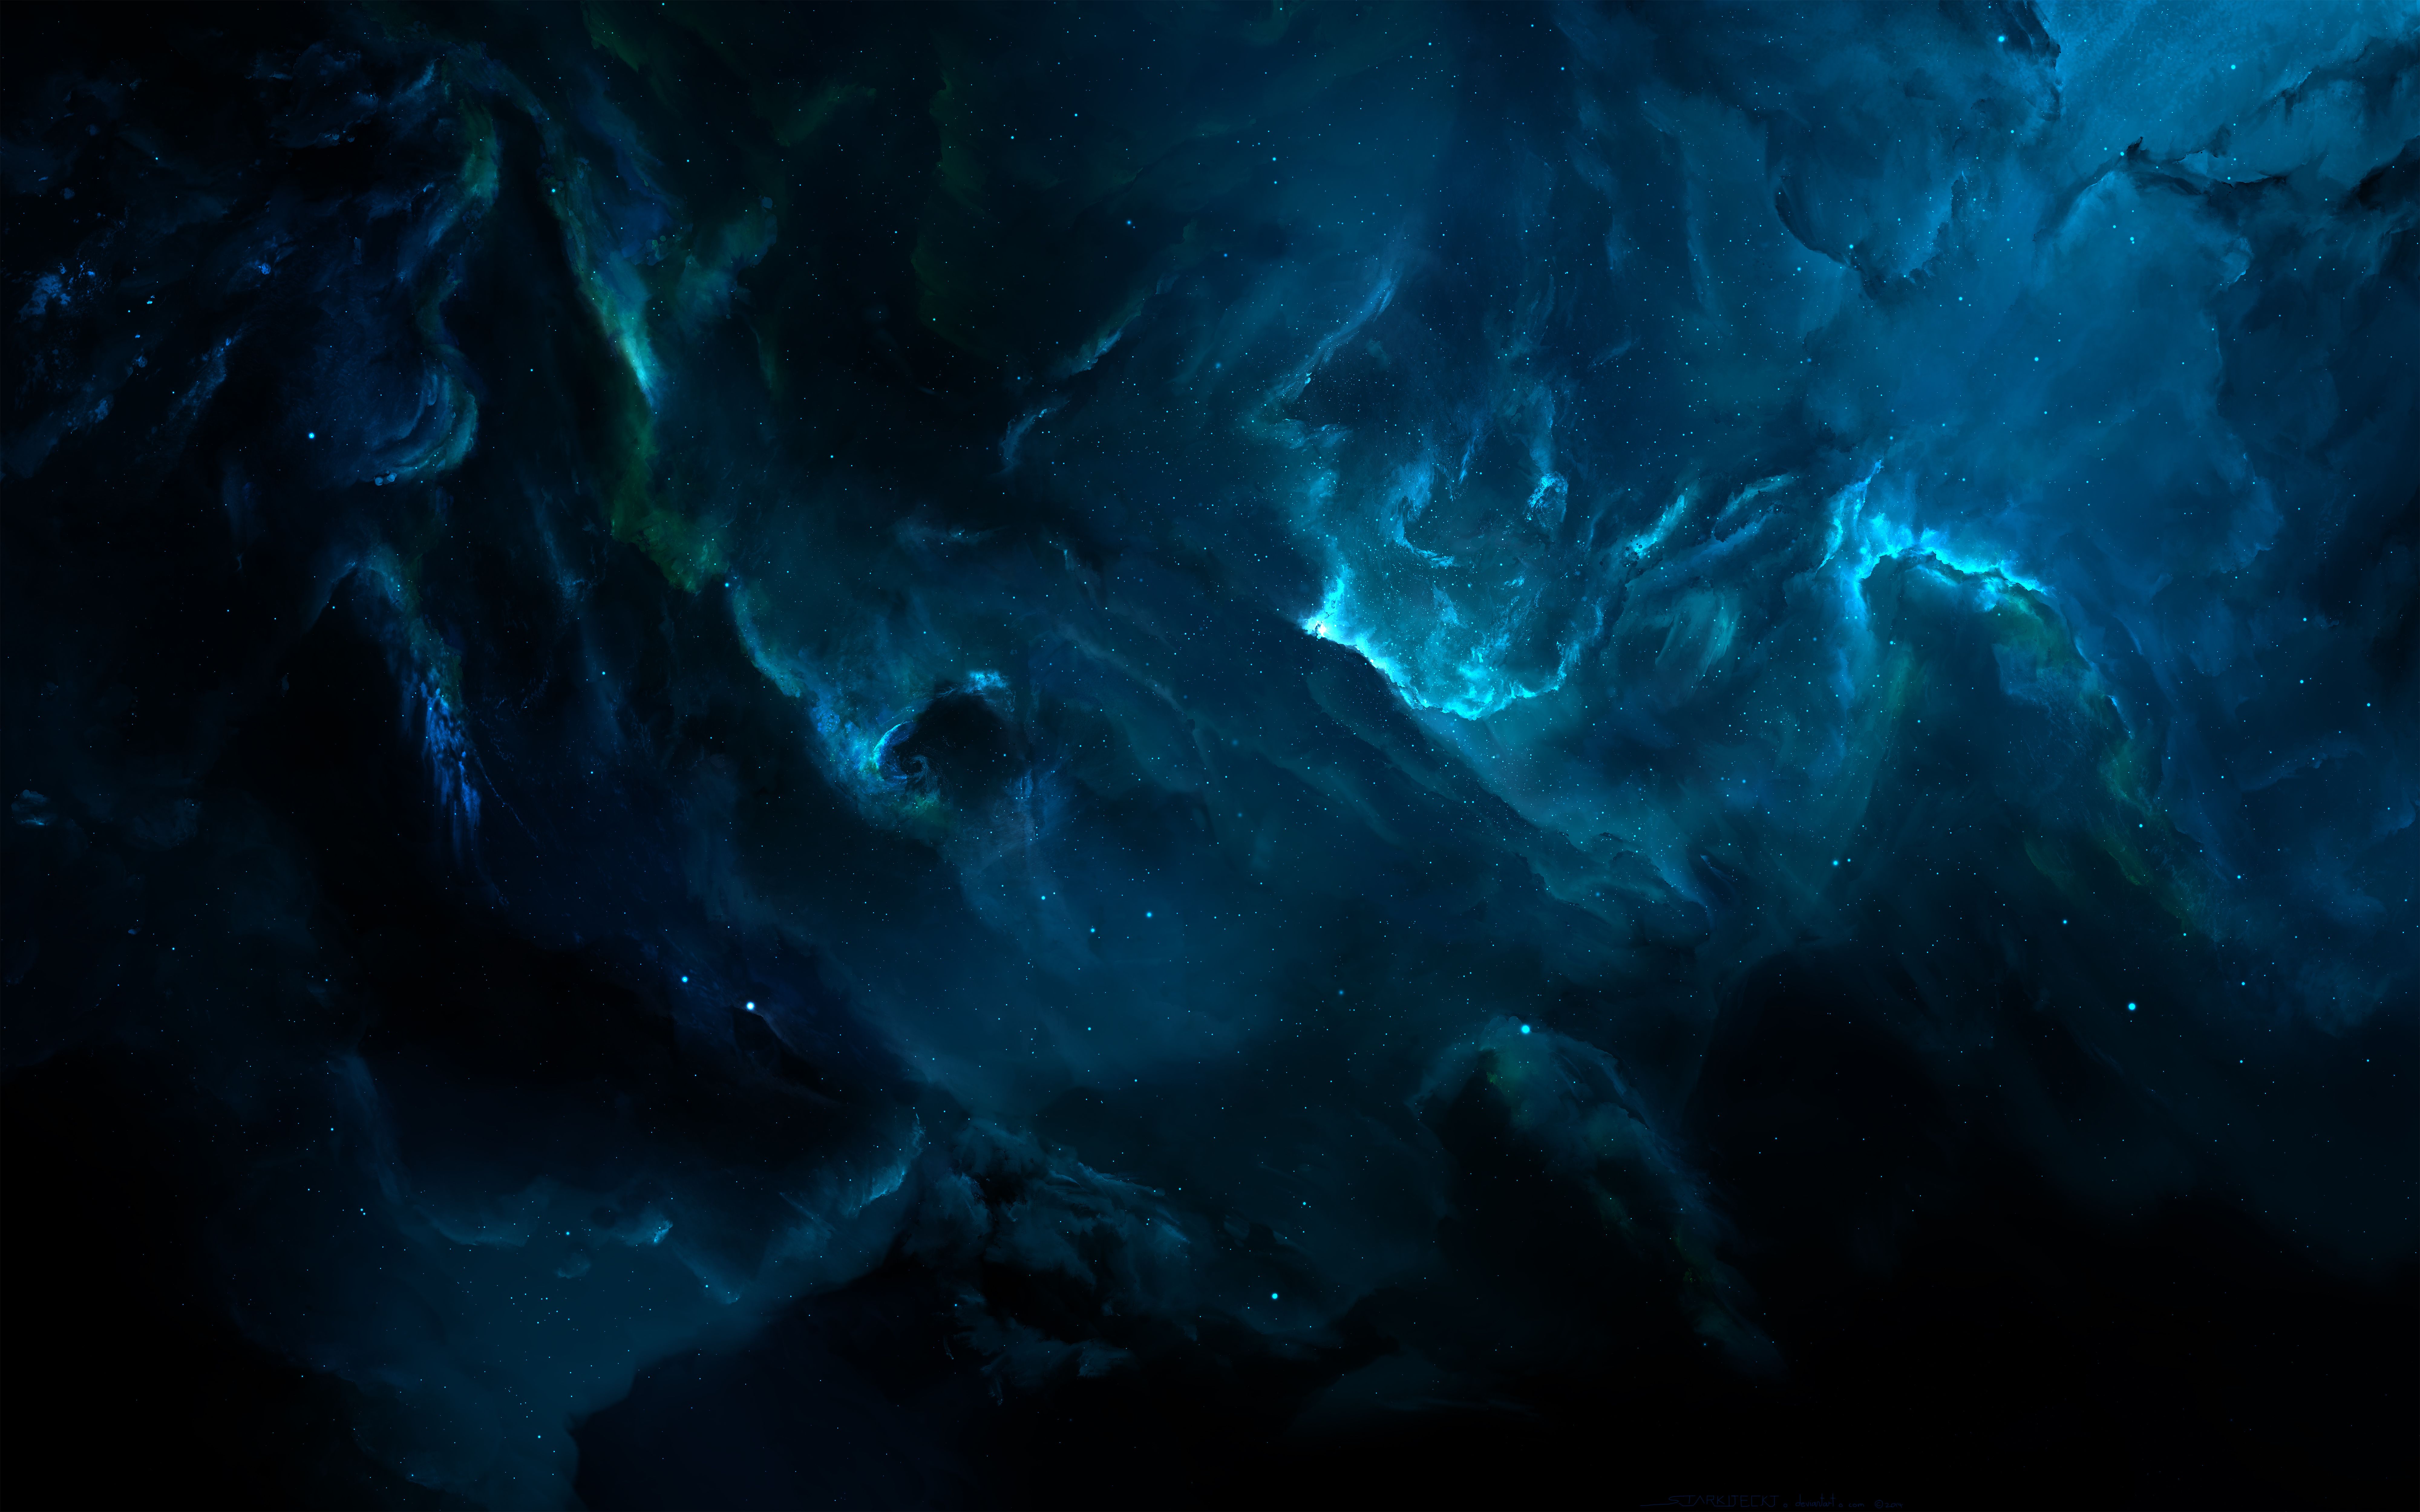 Atlantis Nebula by Starkiteckt - 8000x5000 wallpapers